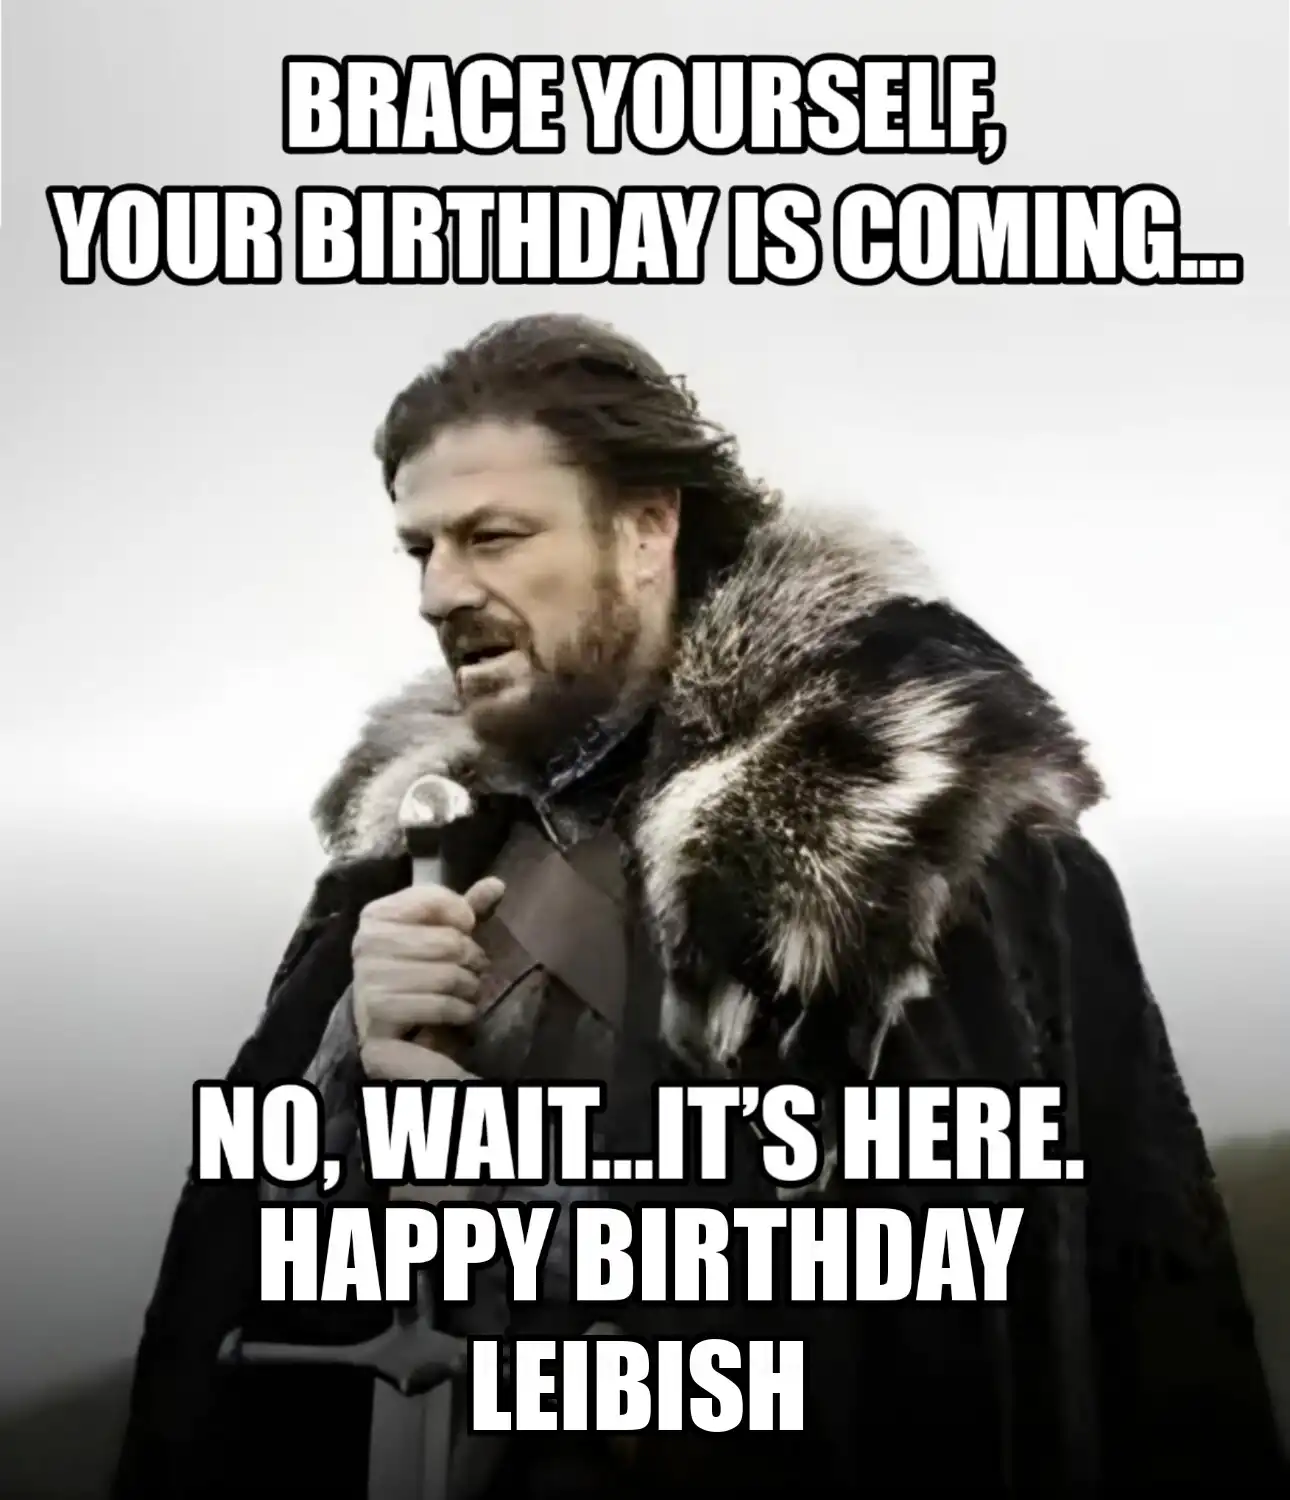 Happy Birthday Leibish Brace Yourself Your Birthday Is Coming Meme